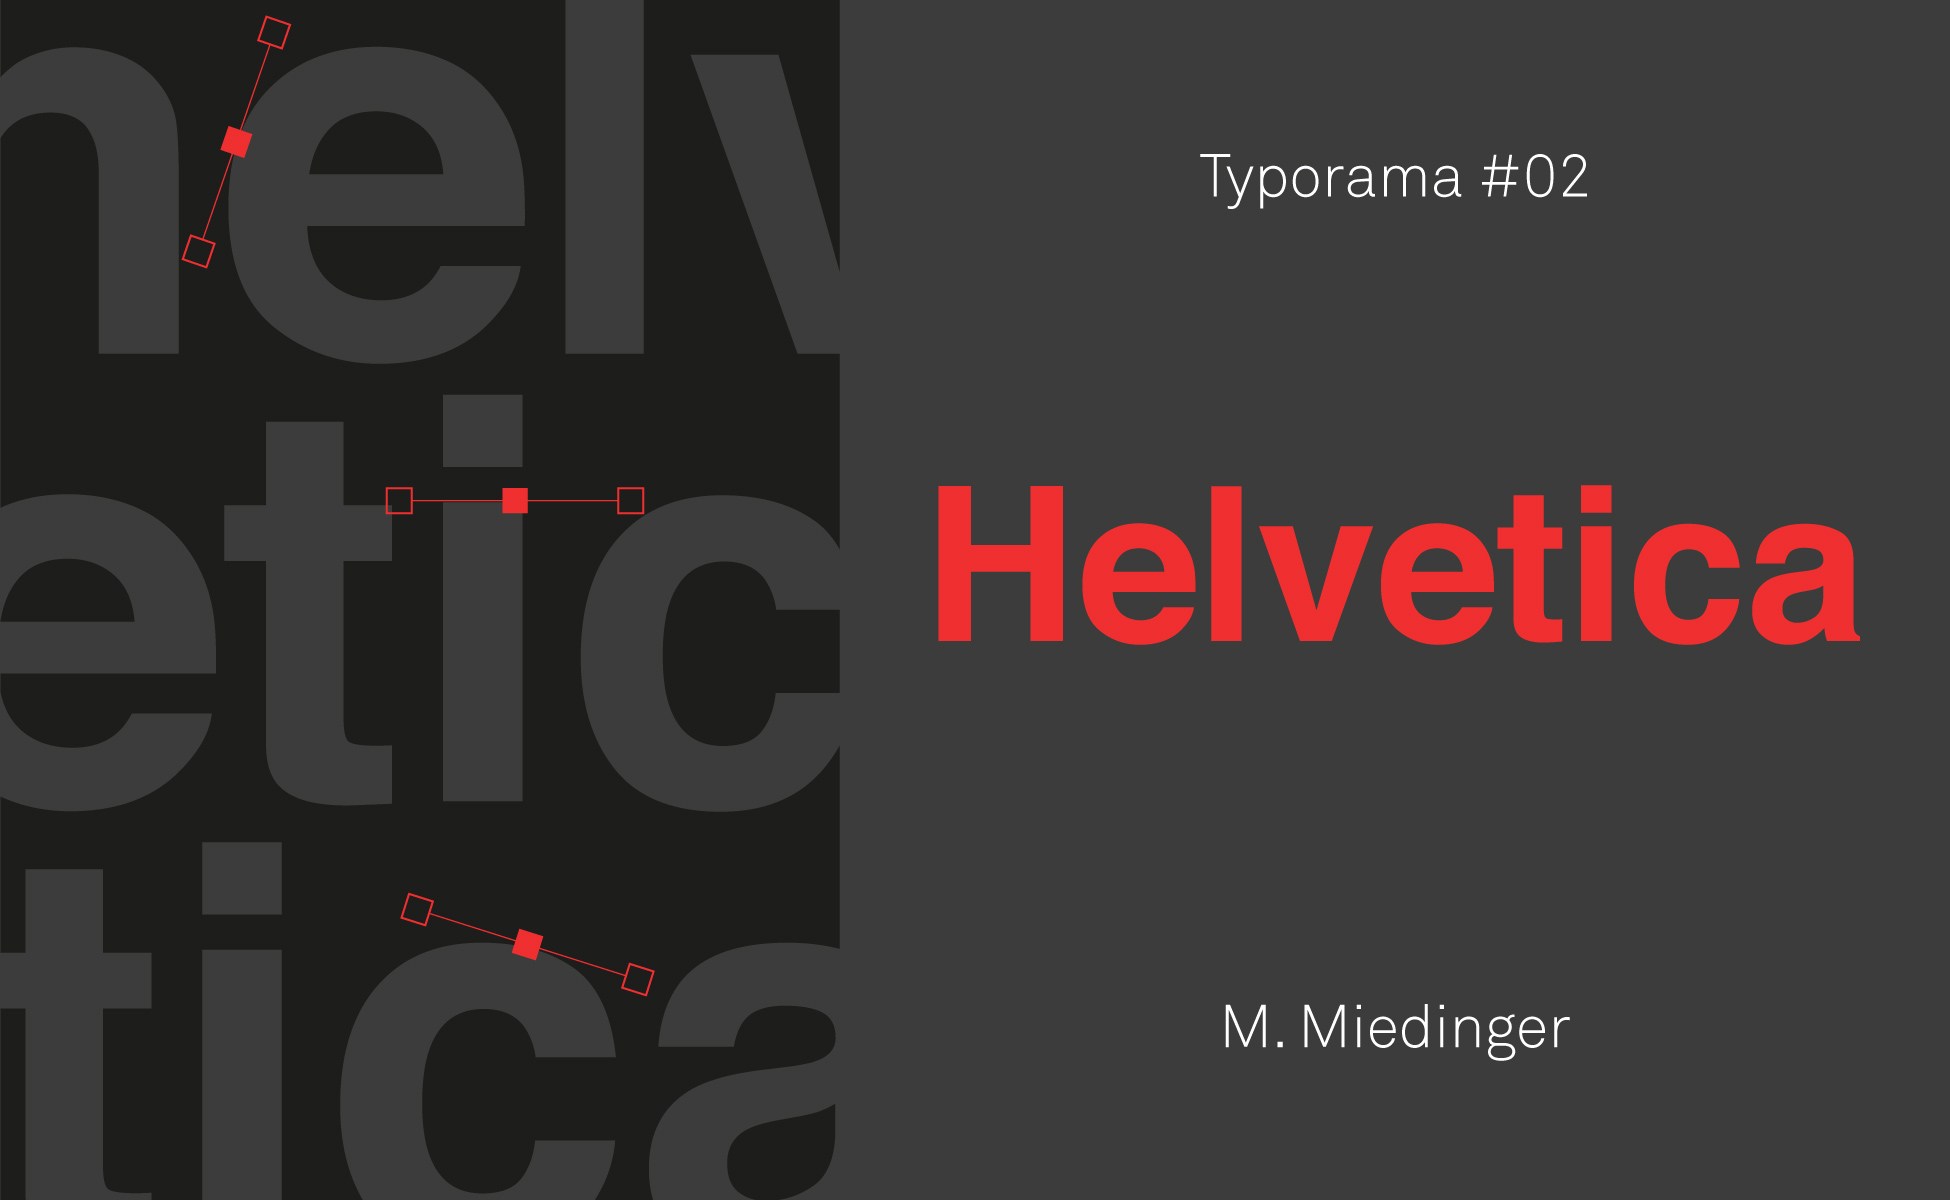 Happy Helvetica to you